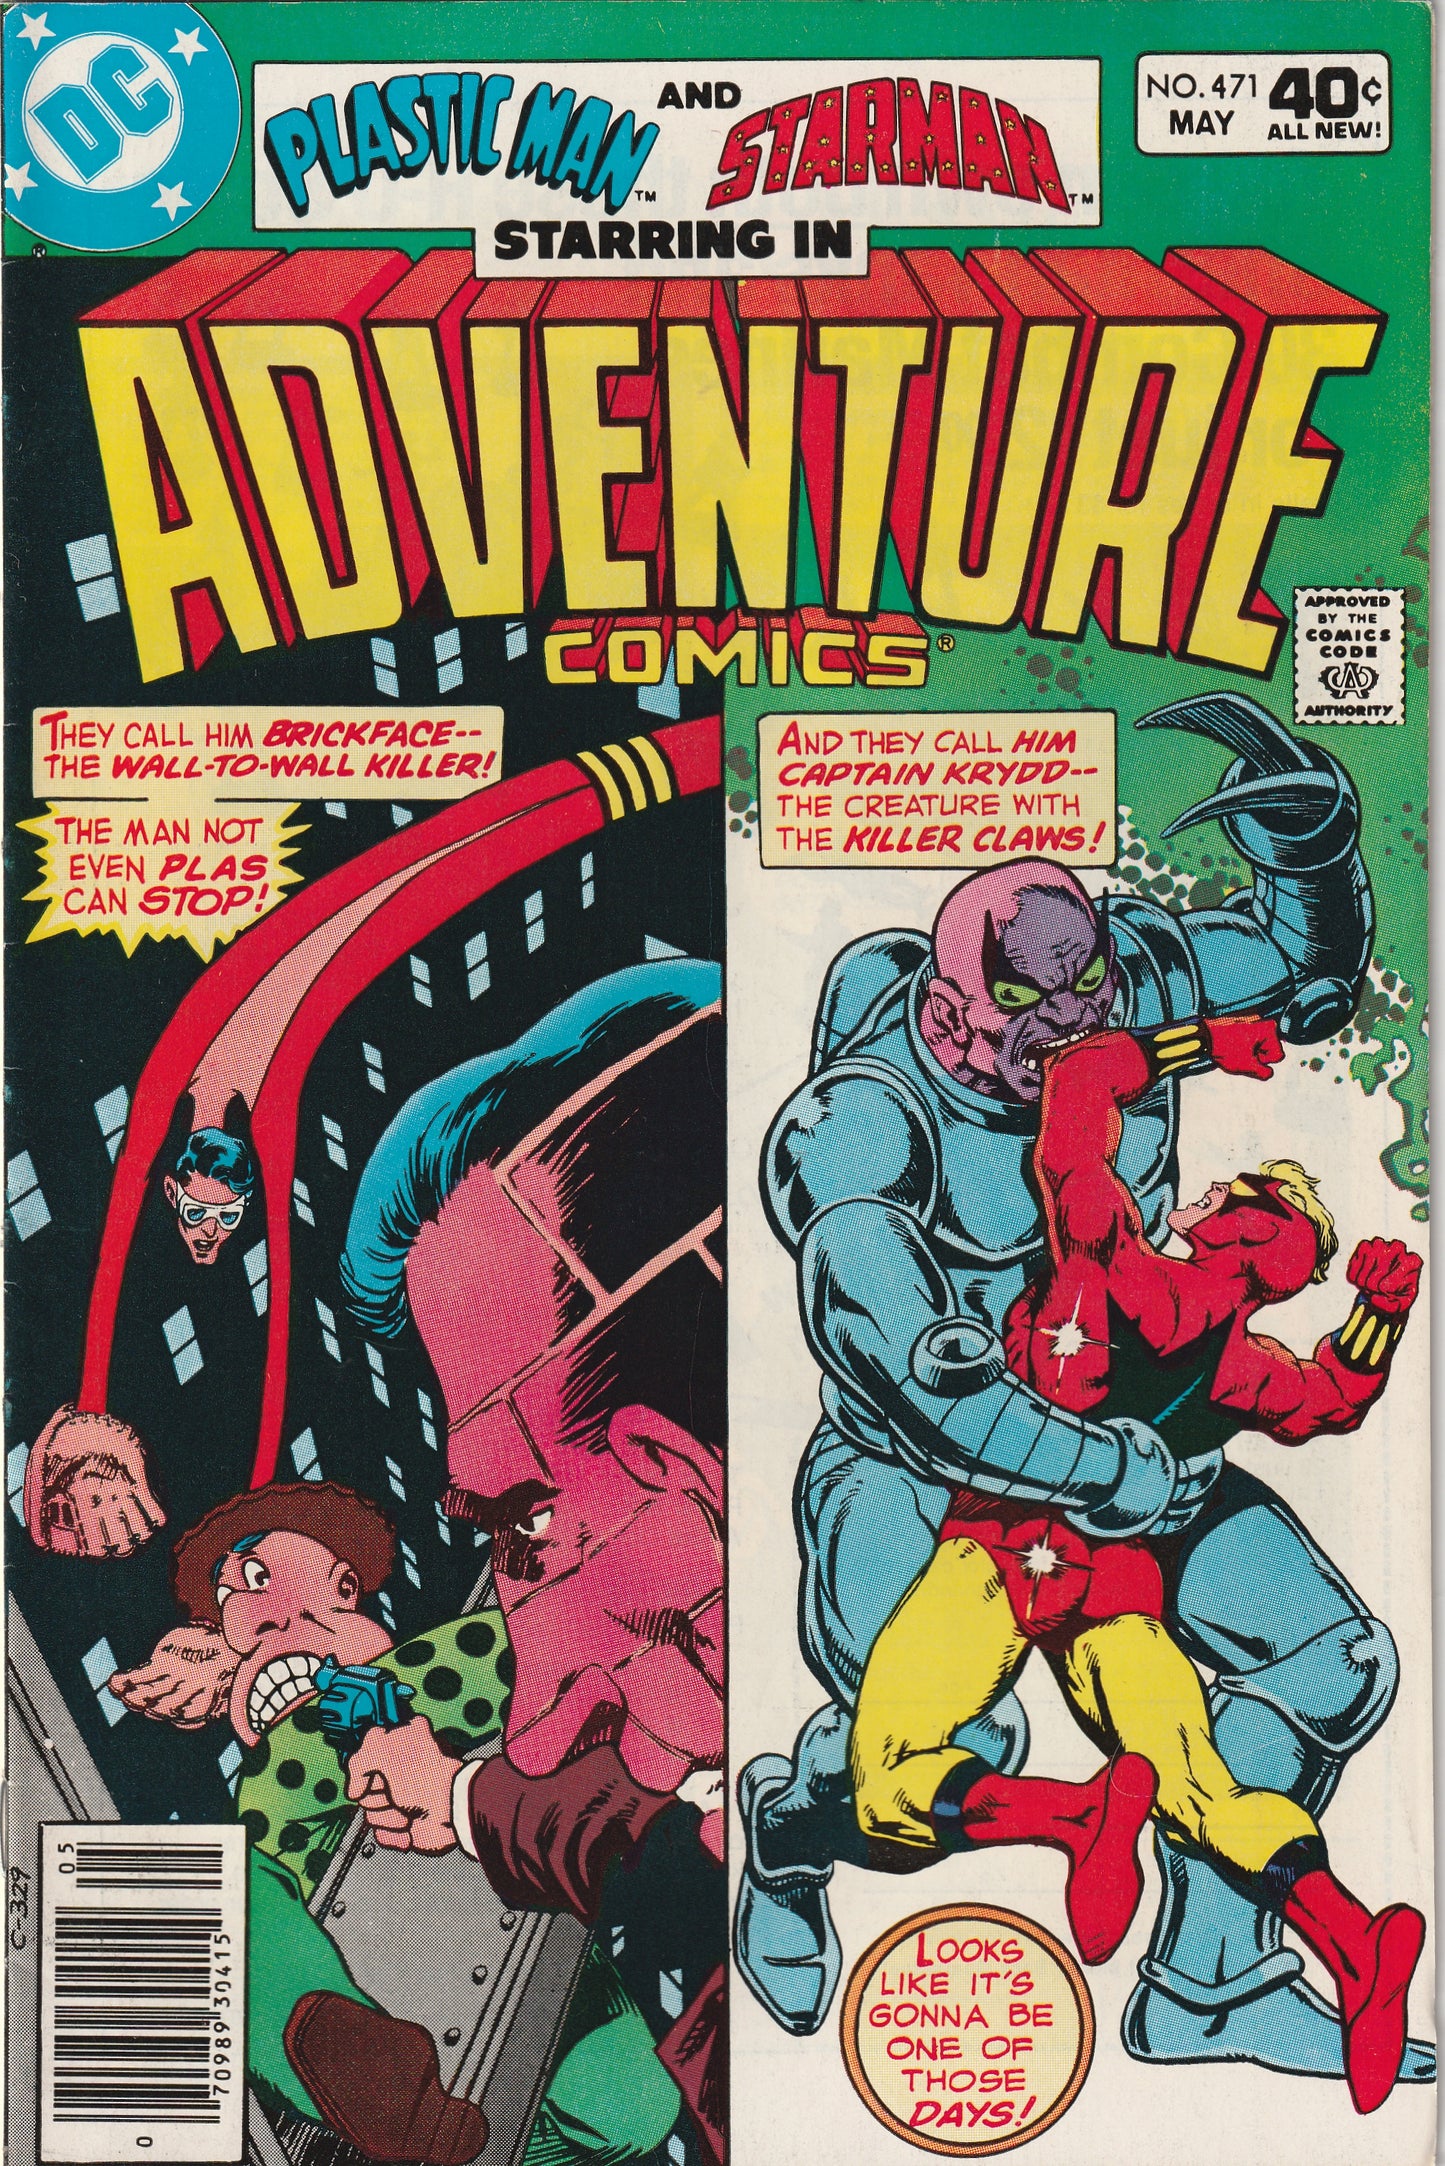 Adventure Comics #471 (1980) - Starring Plastic Man & Starman